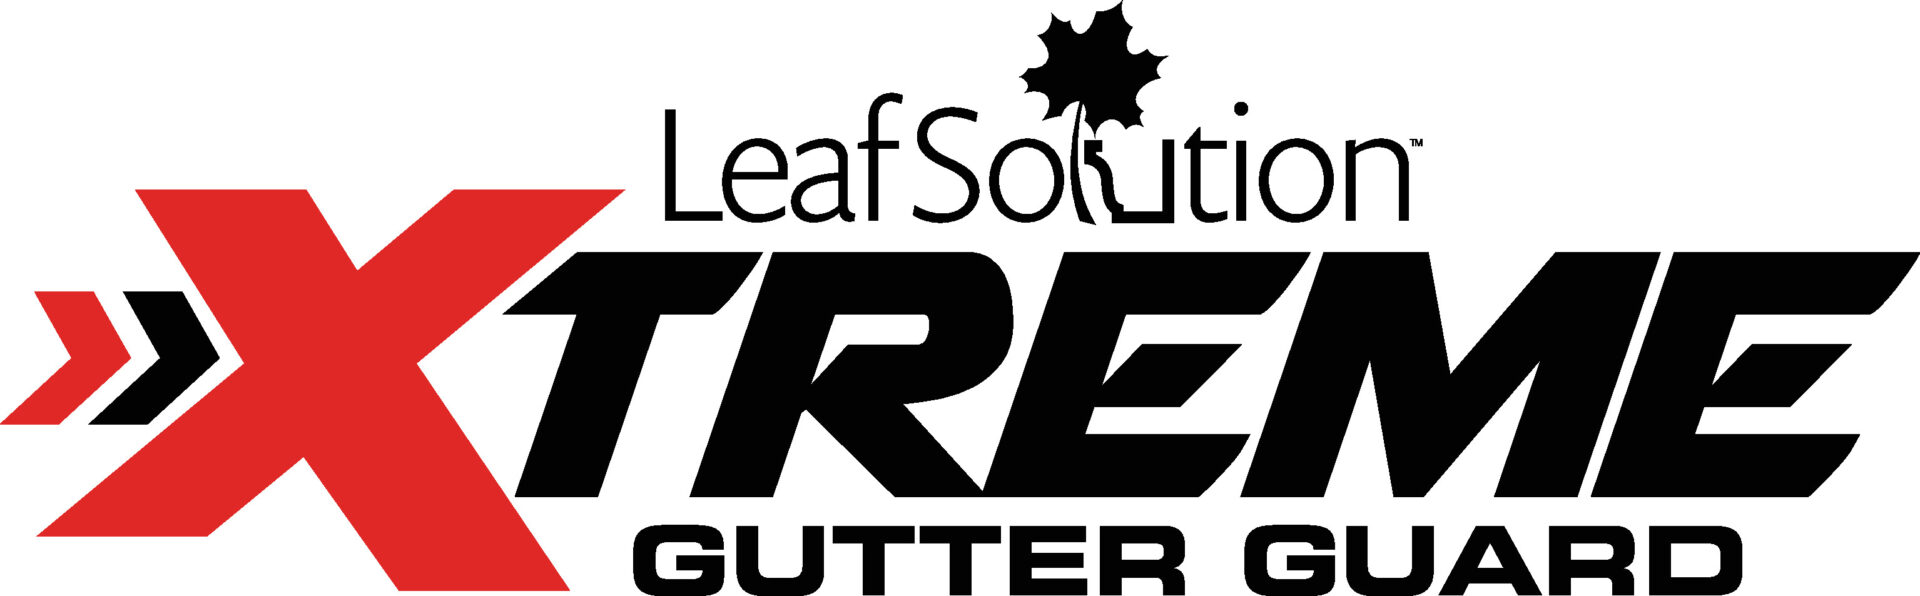 Leaf Solutions